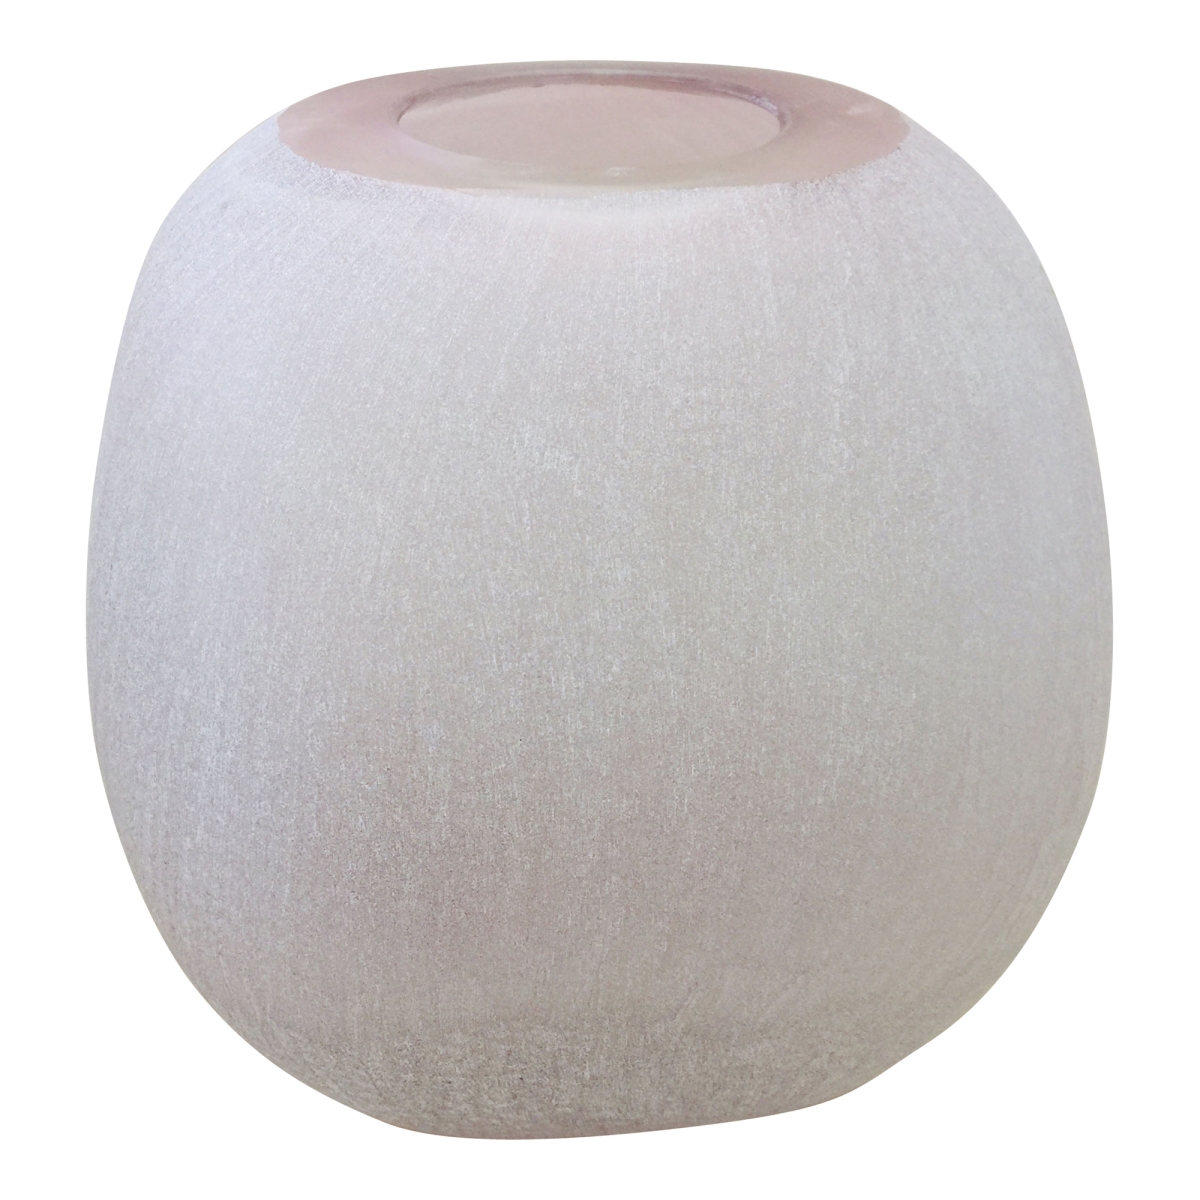 Hs-1026-18 Concord Glass Vase